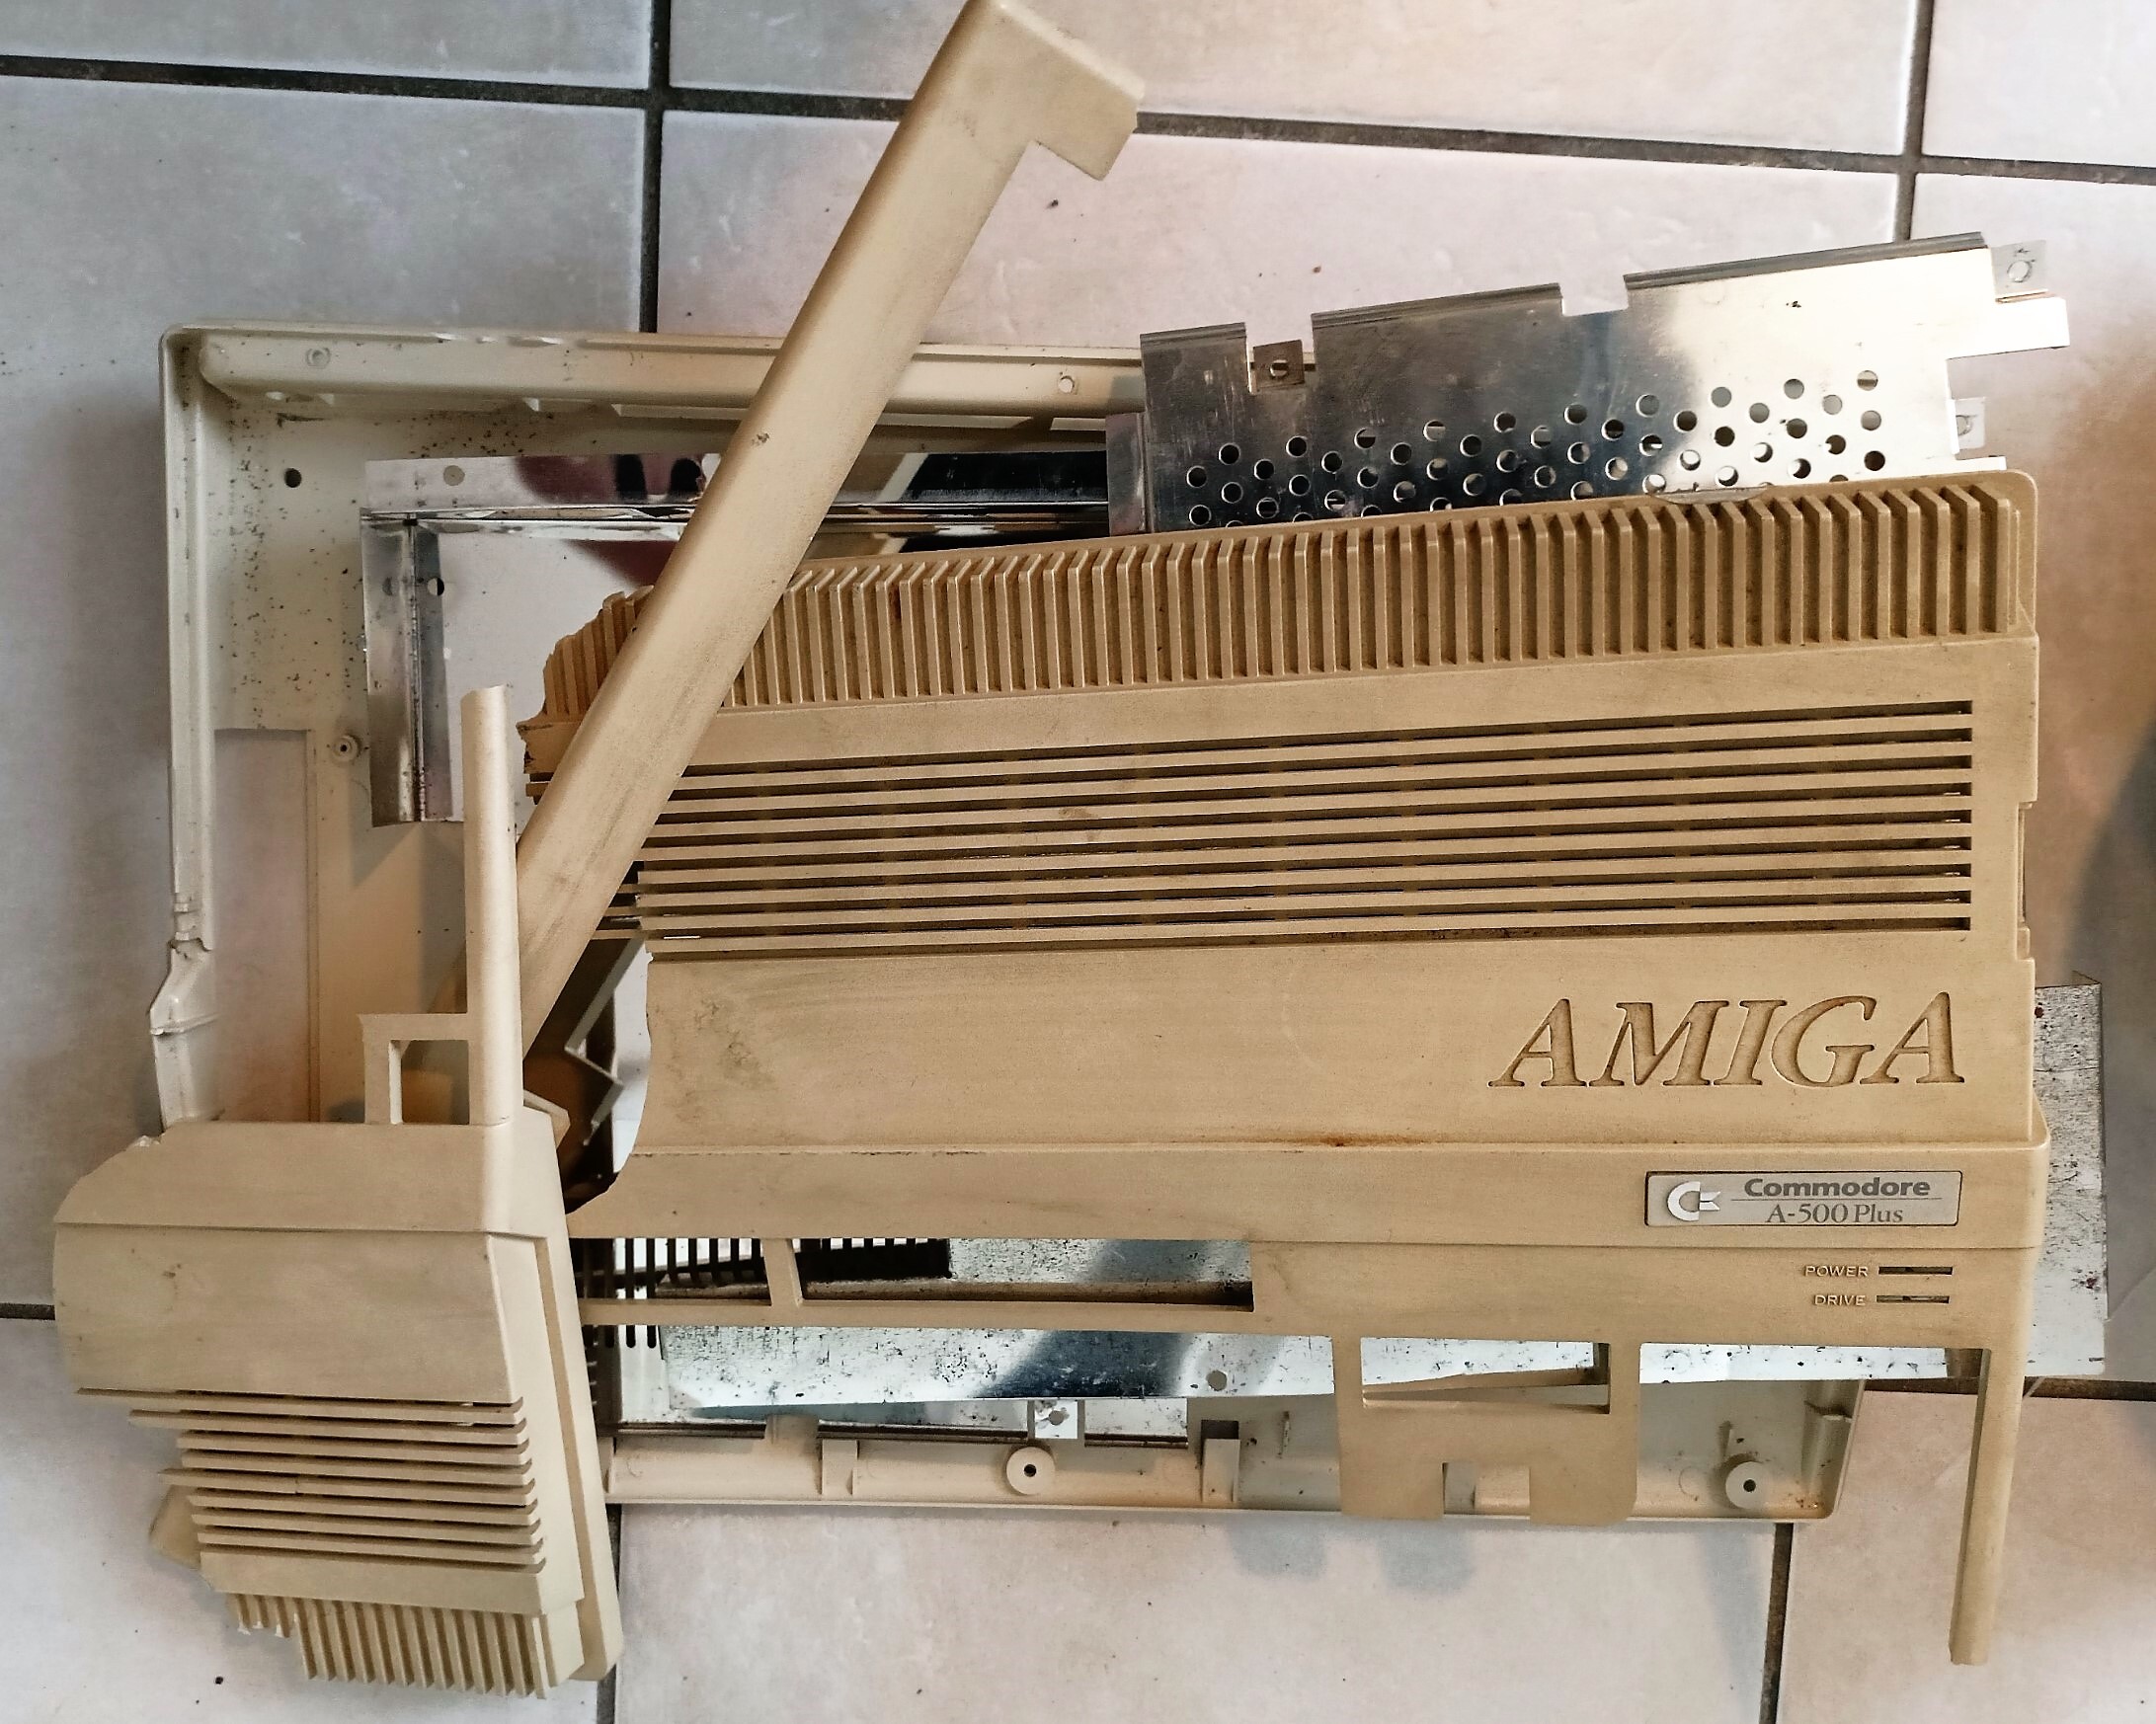  [Ech] Atari 1040STE / Amstrad CPC464 / Clone Gravis Ultrasound / Etc [Don] Carrosserie A500+ HS / Ecran Atari SC1435 HS 80d9